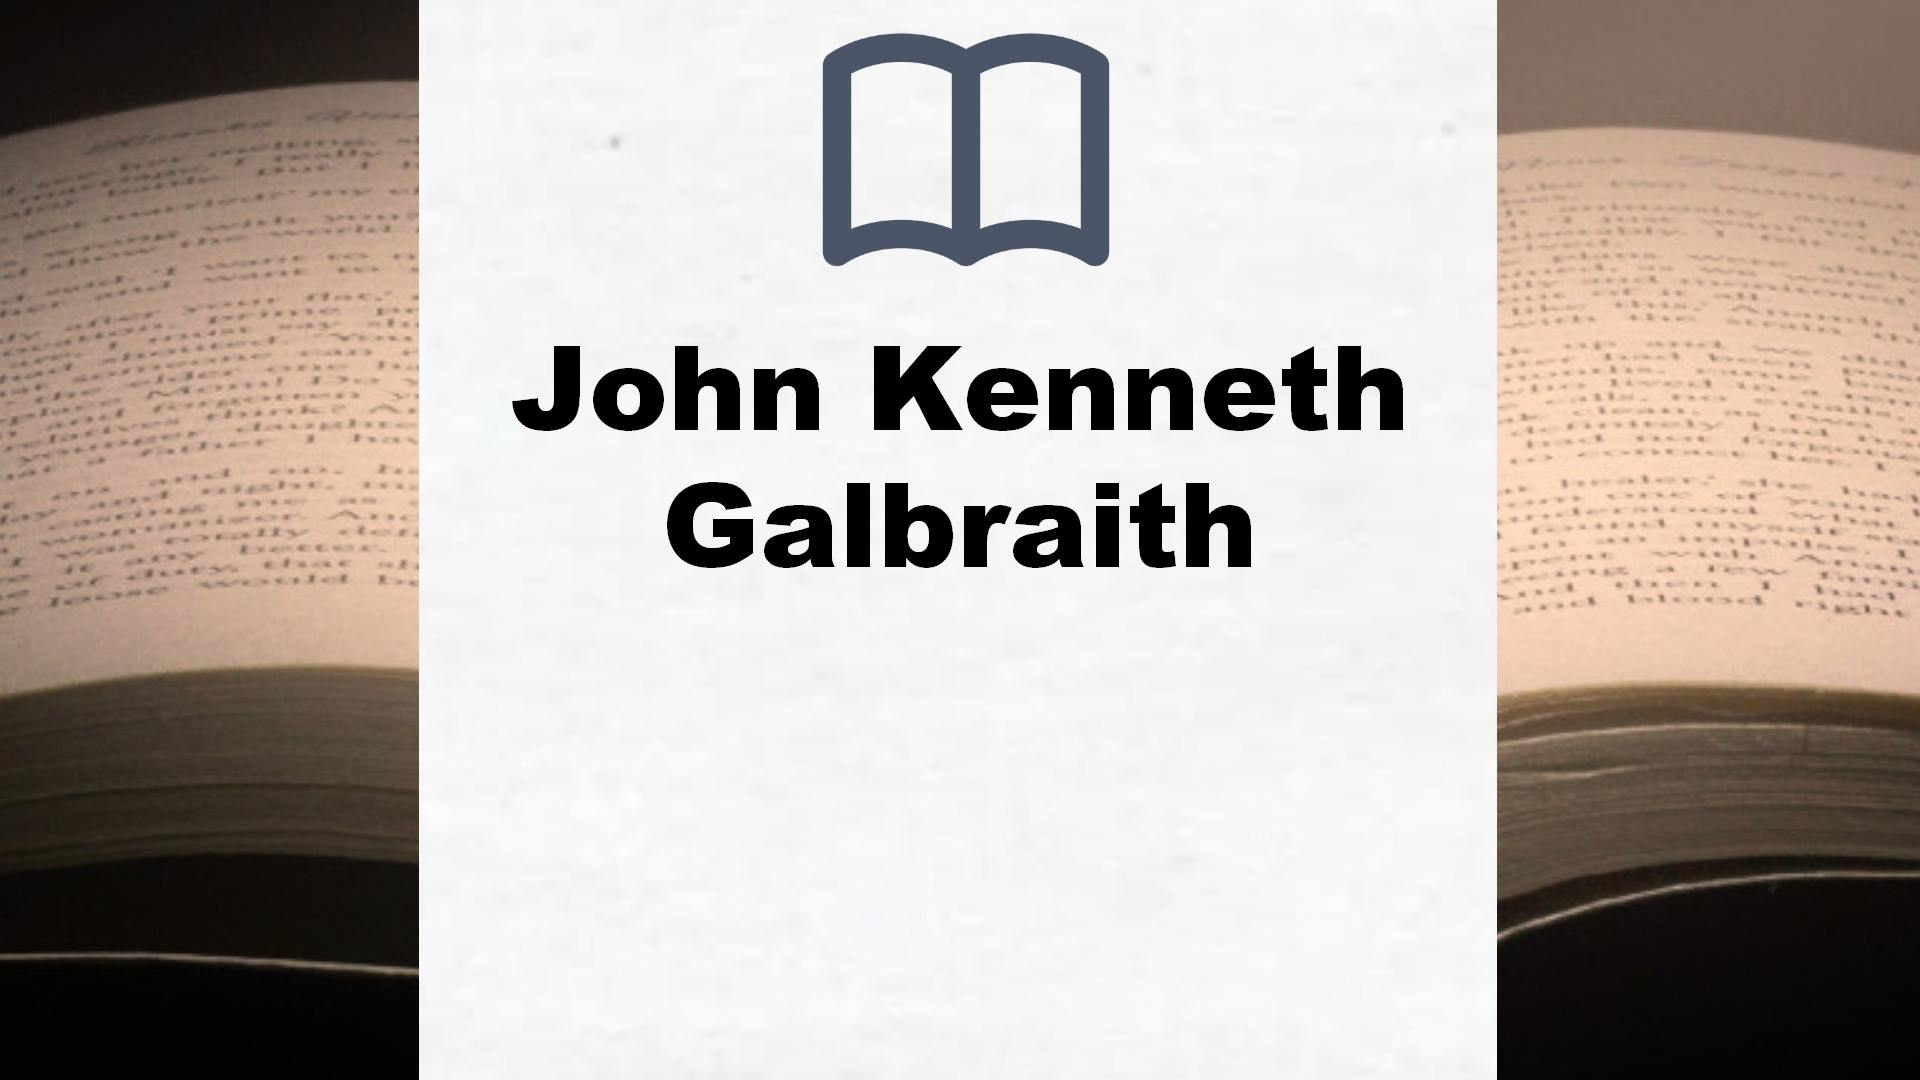 Libros John Kenneth Galbraith